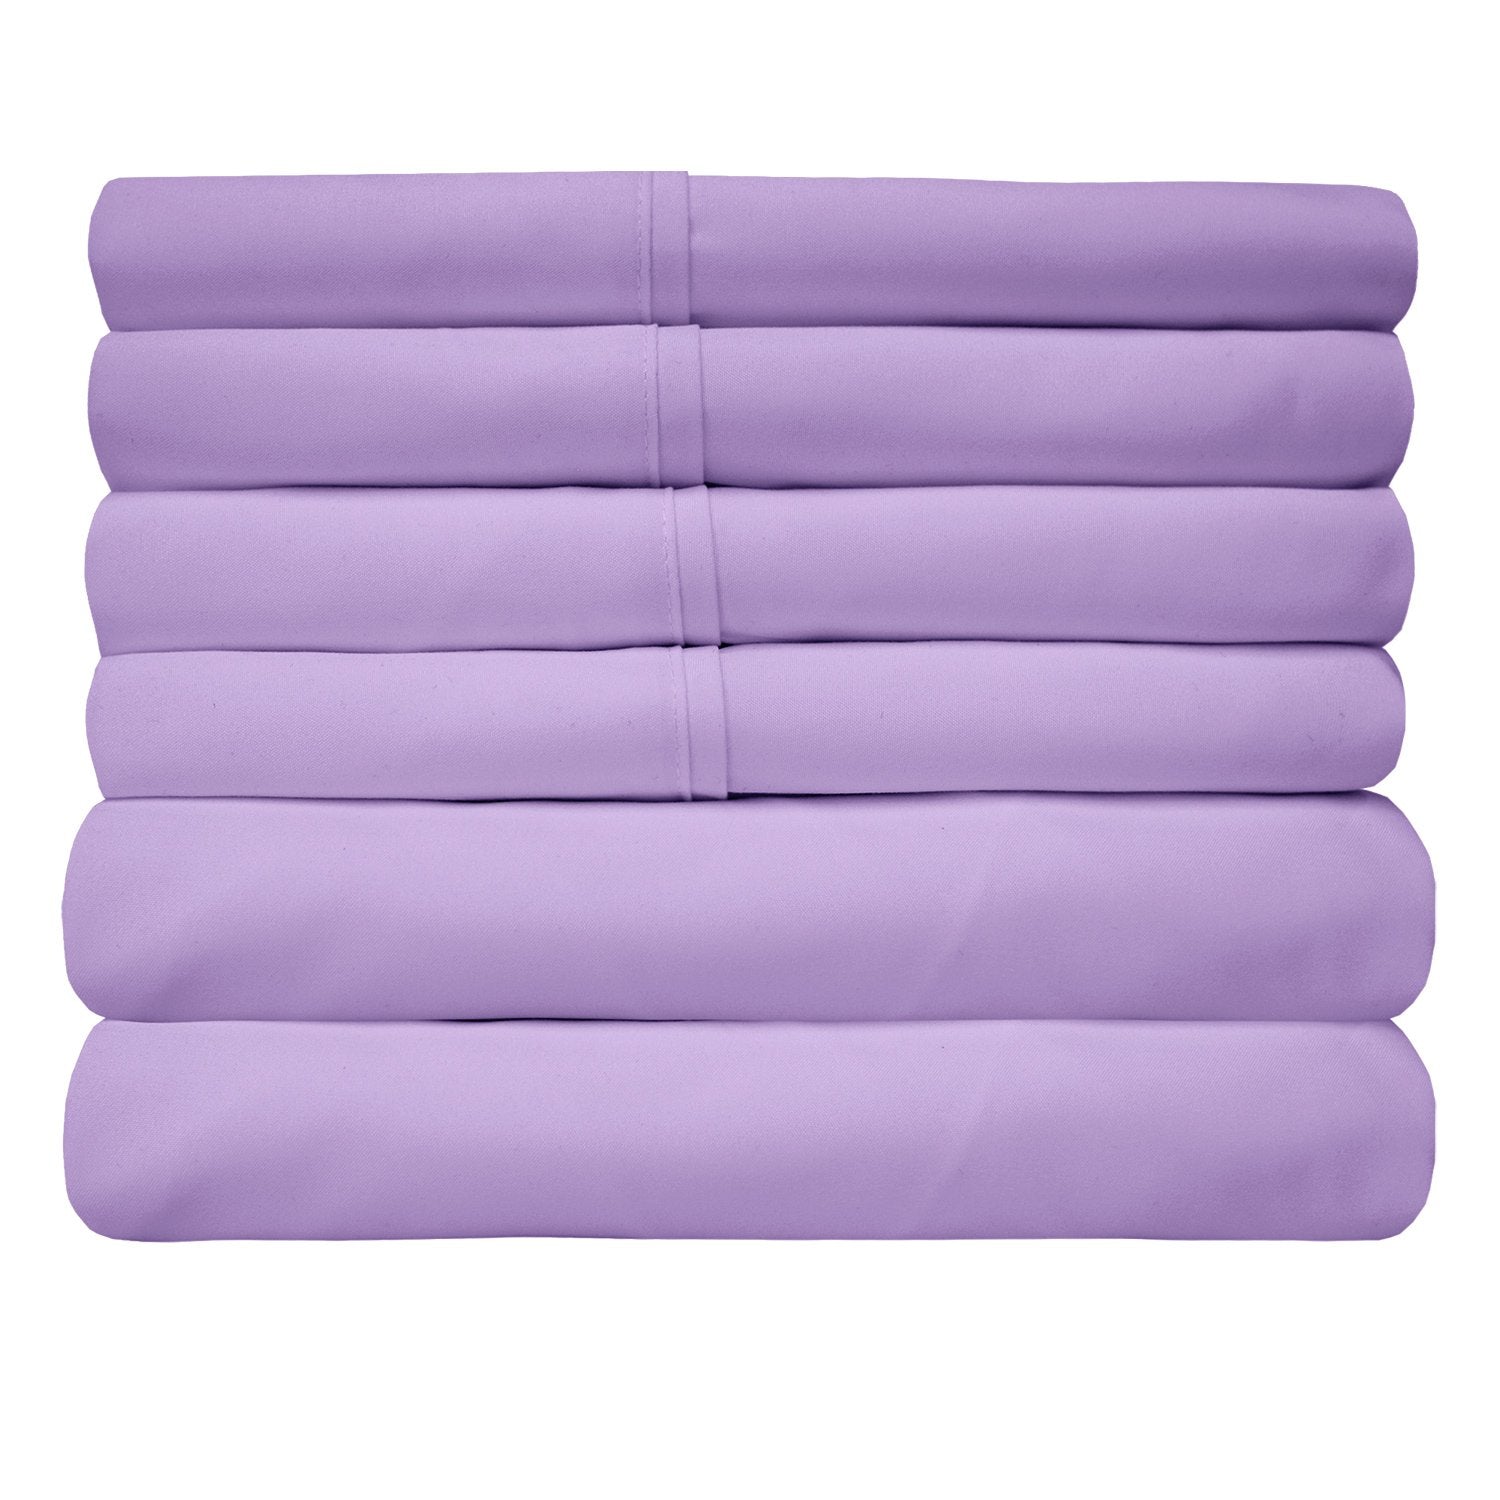 Deluxe 6-Piece Bed Sheet Set (Lavender) - Folded 2